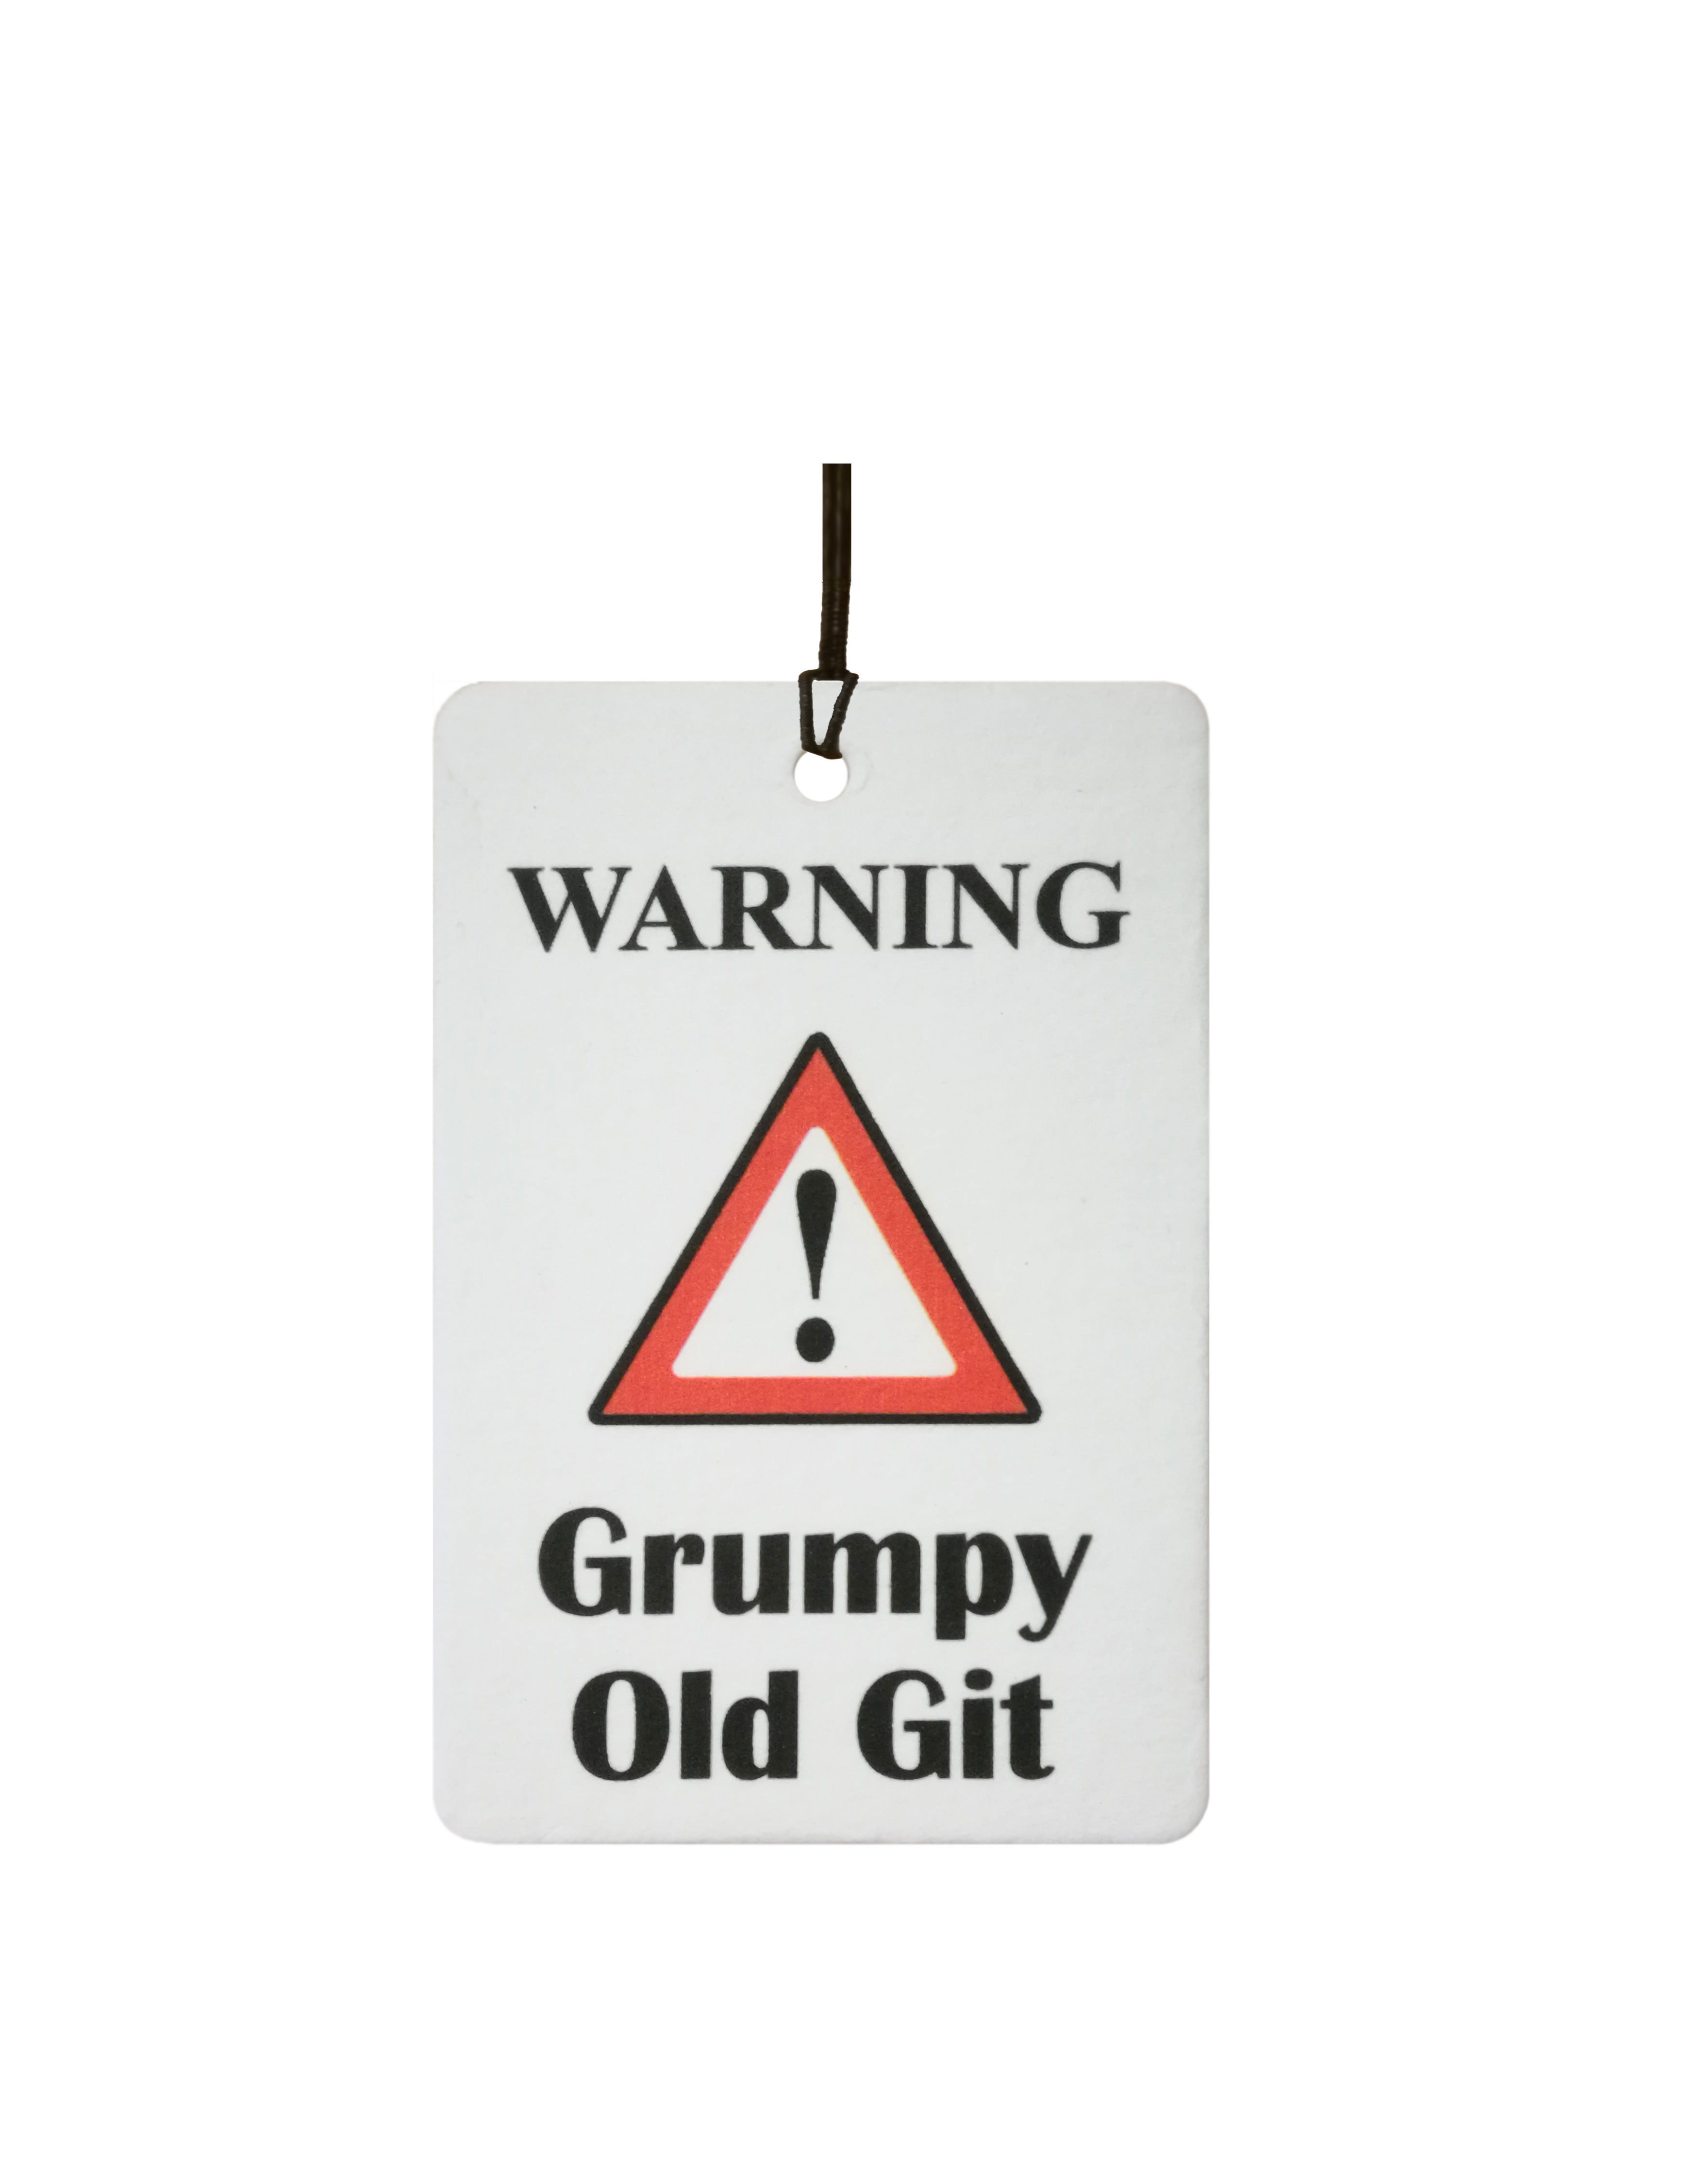 Warning - Grumpy Old Git